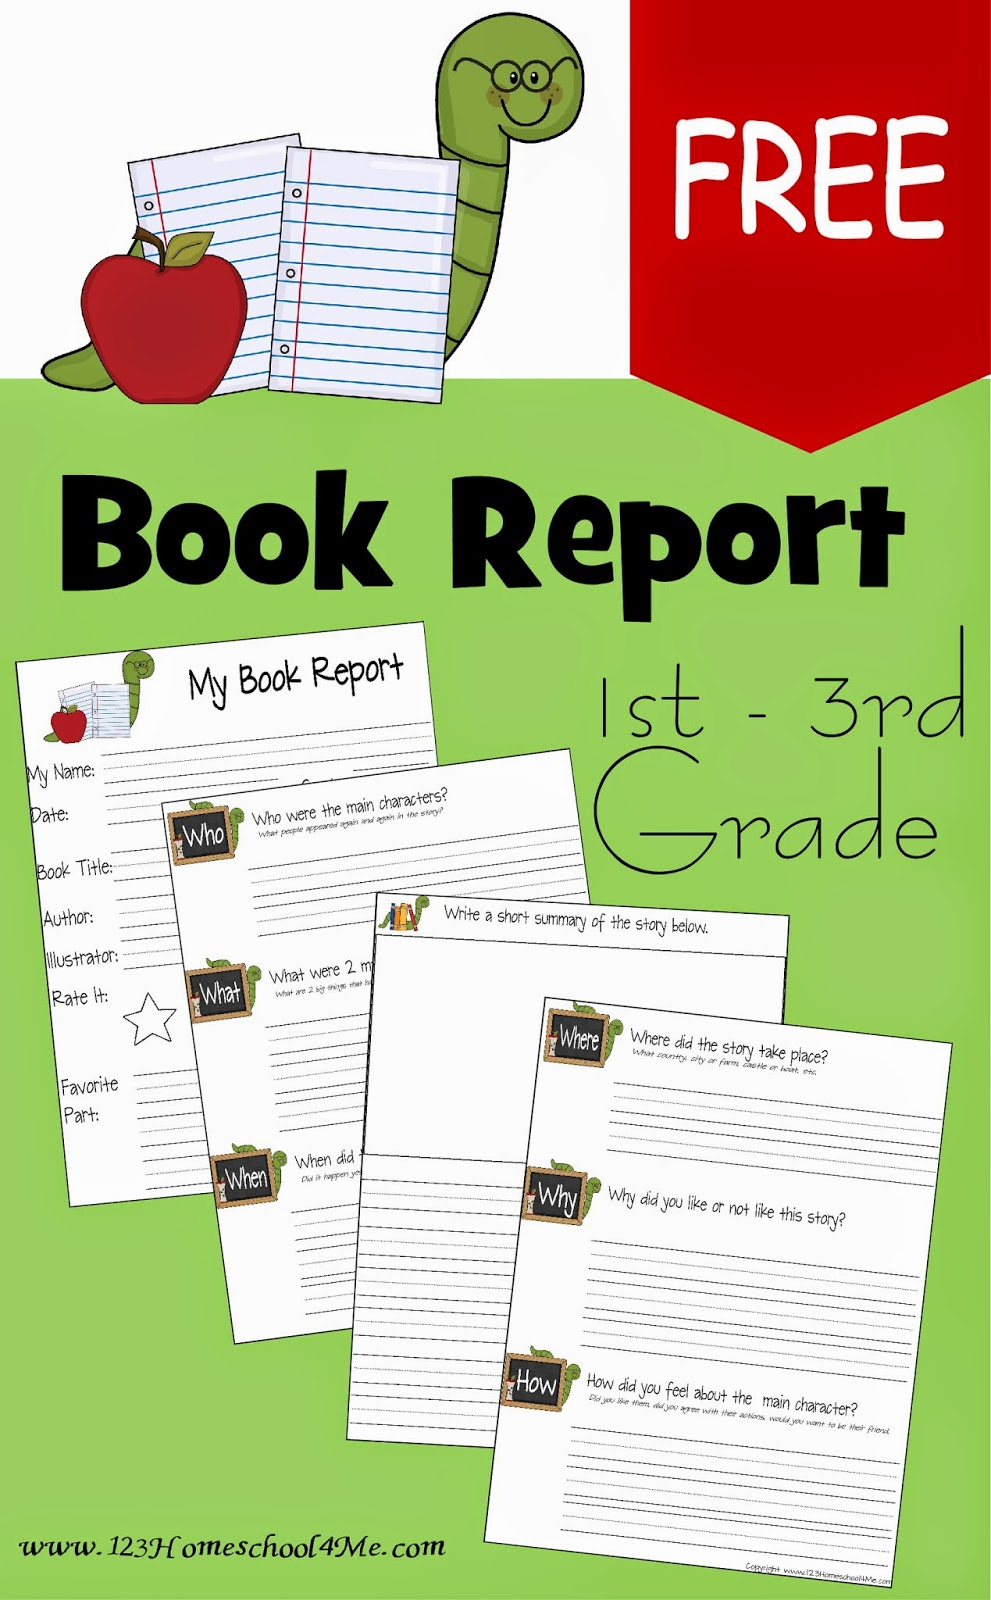 FREE Book Report Template - Educational Freebies In 1St Grade Book Report Template